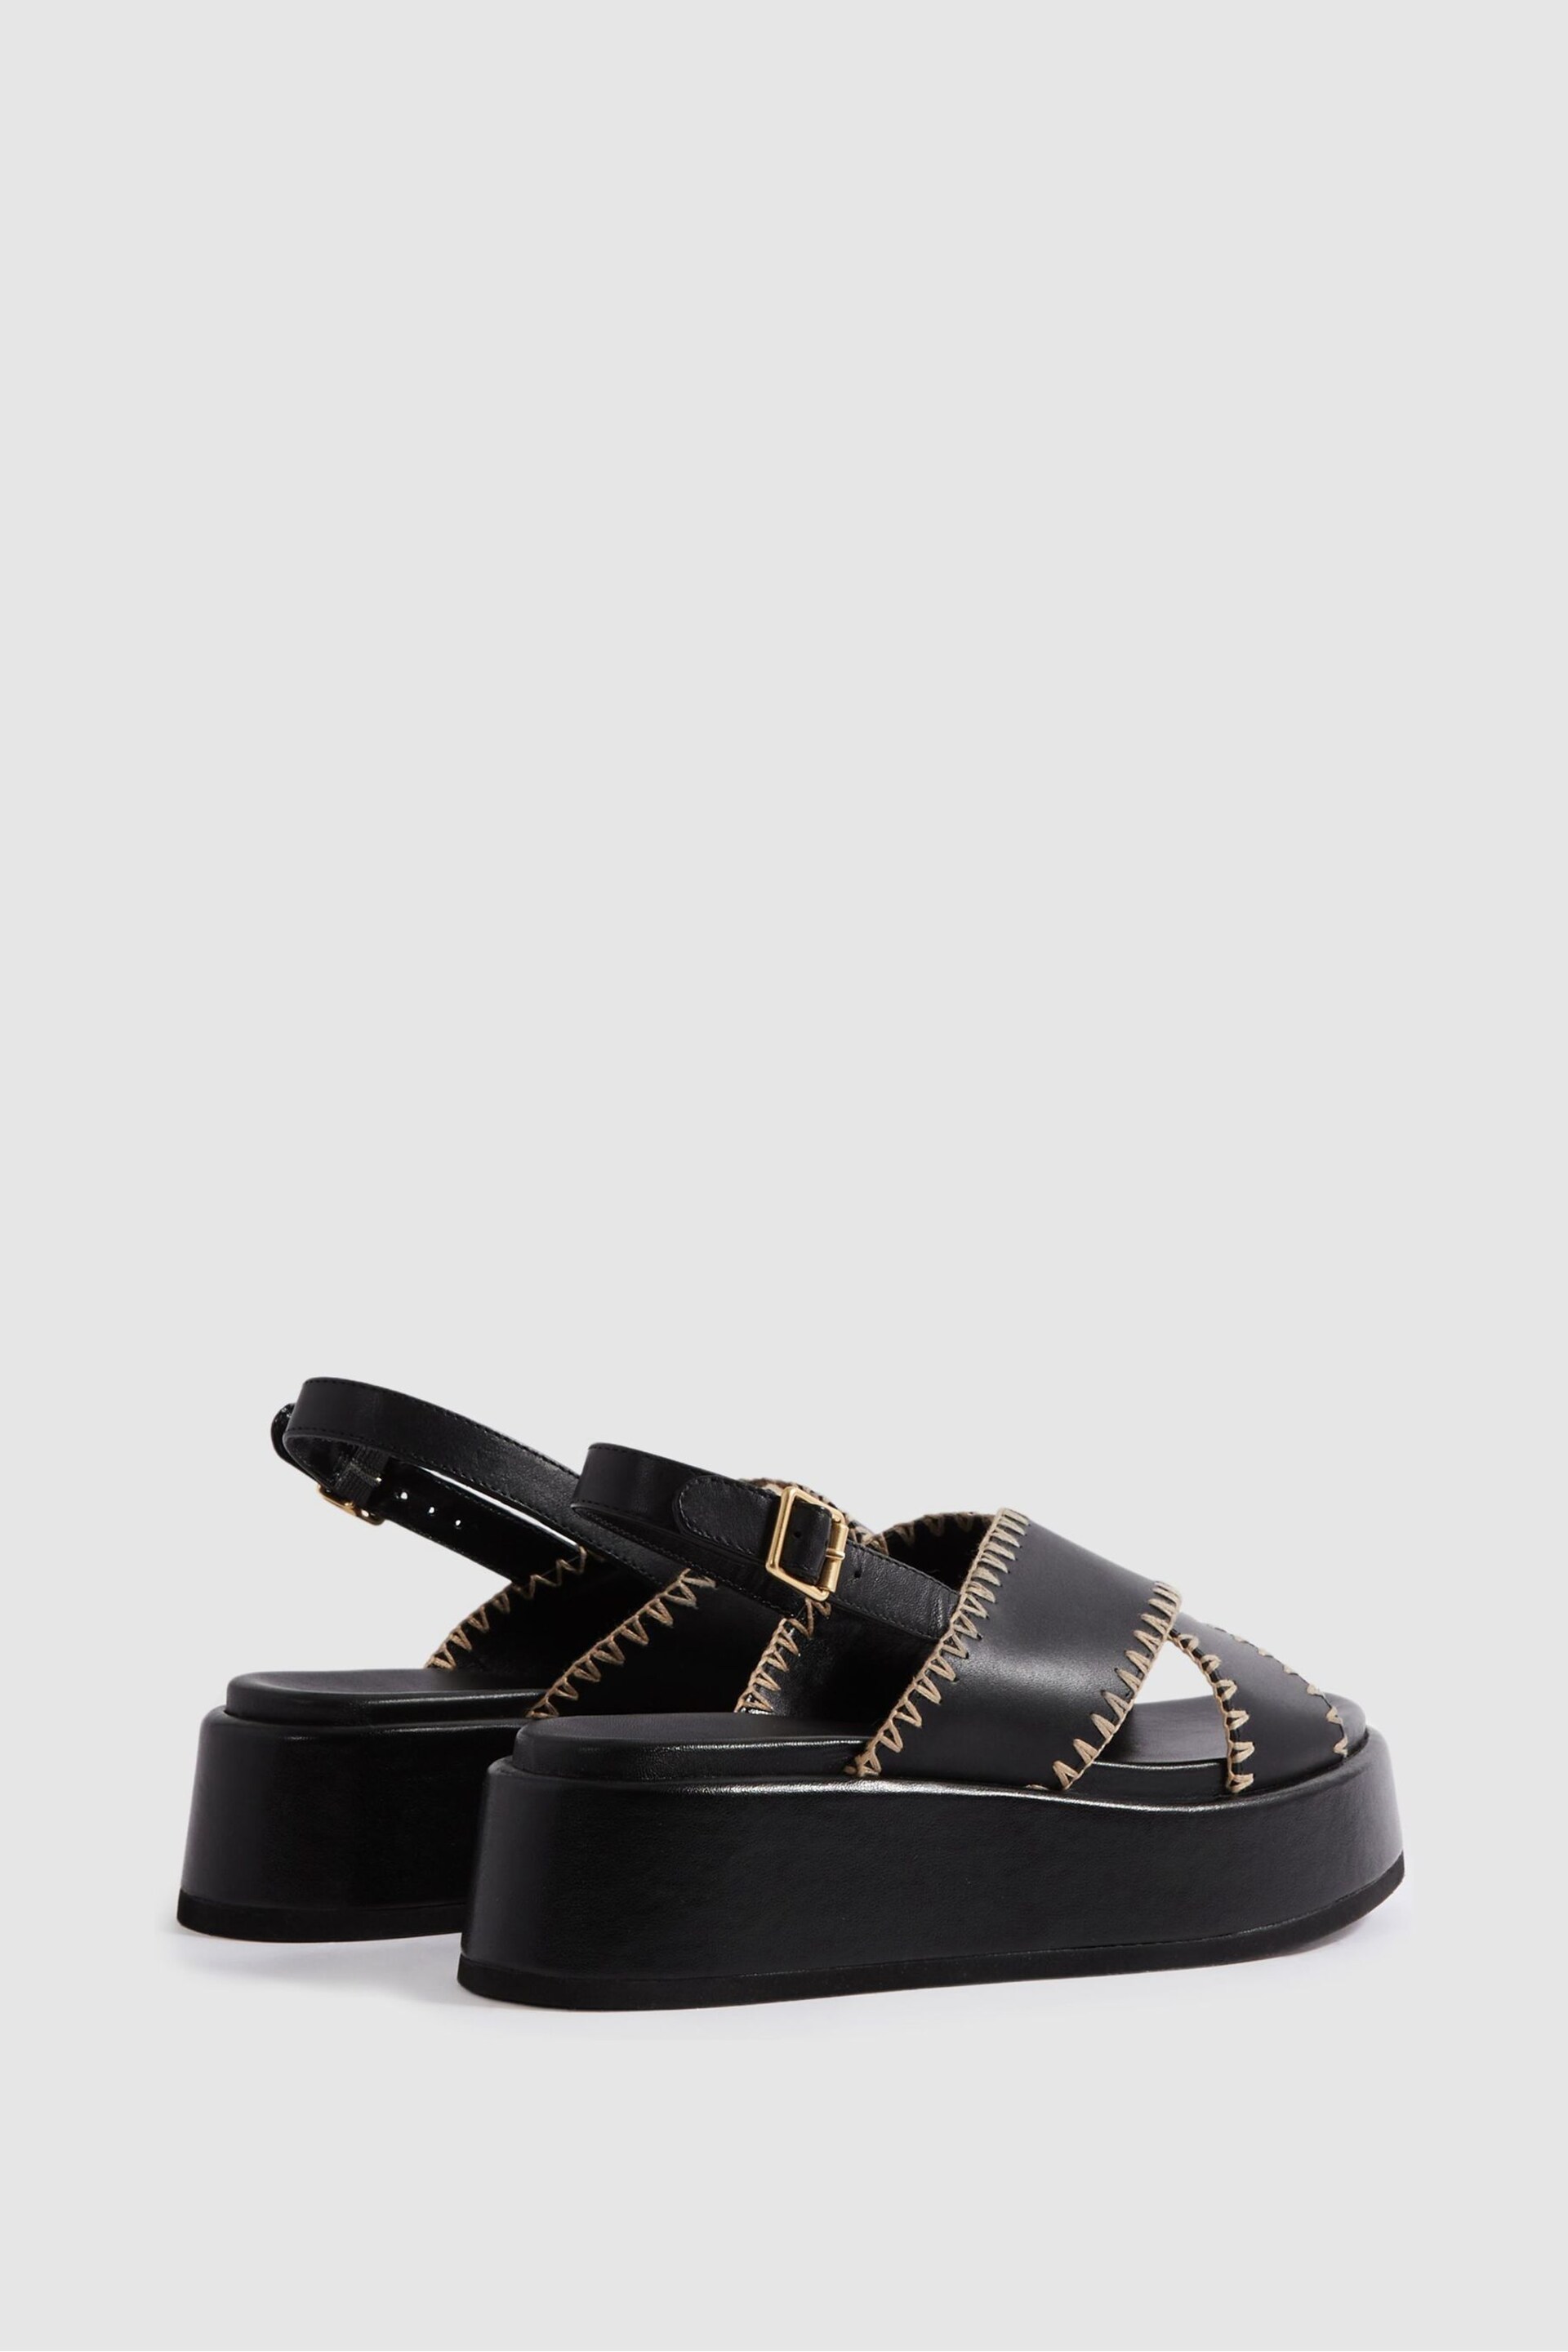 Reiss Black Melissa Leather Raffia Stitch Platform Sandals - Image 4 of 5